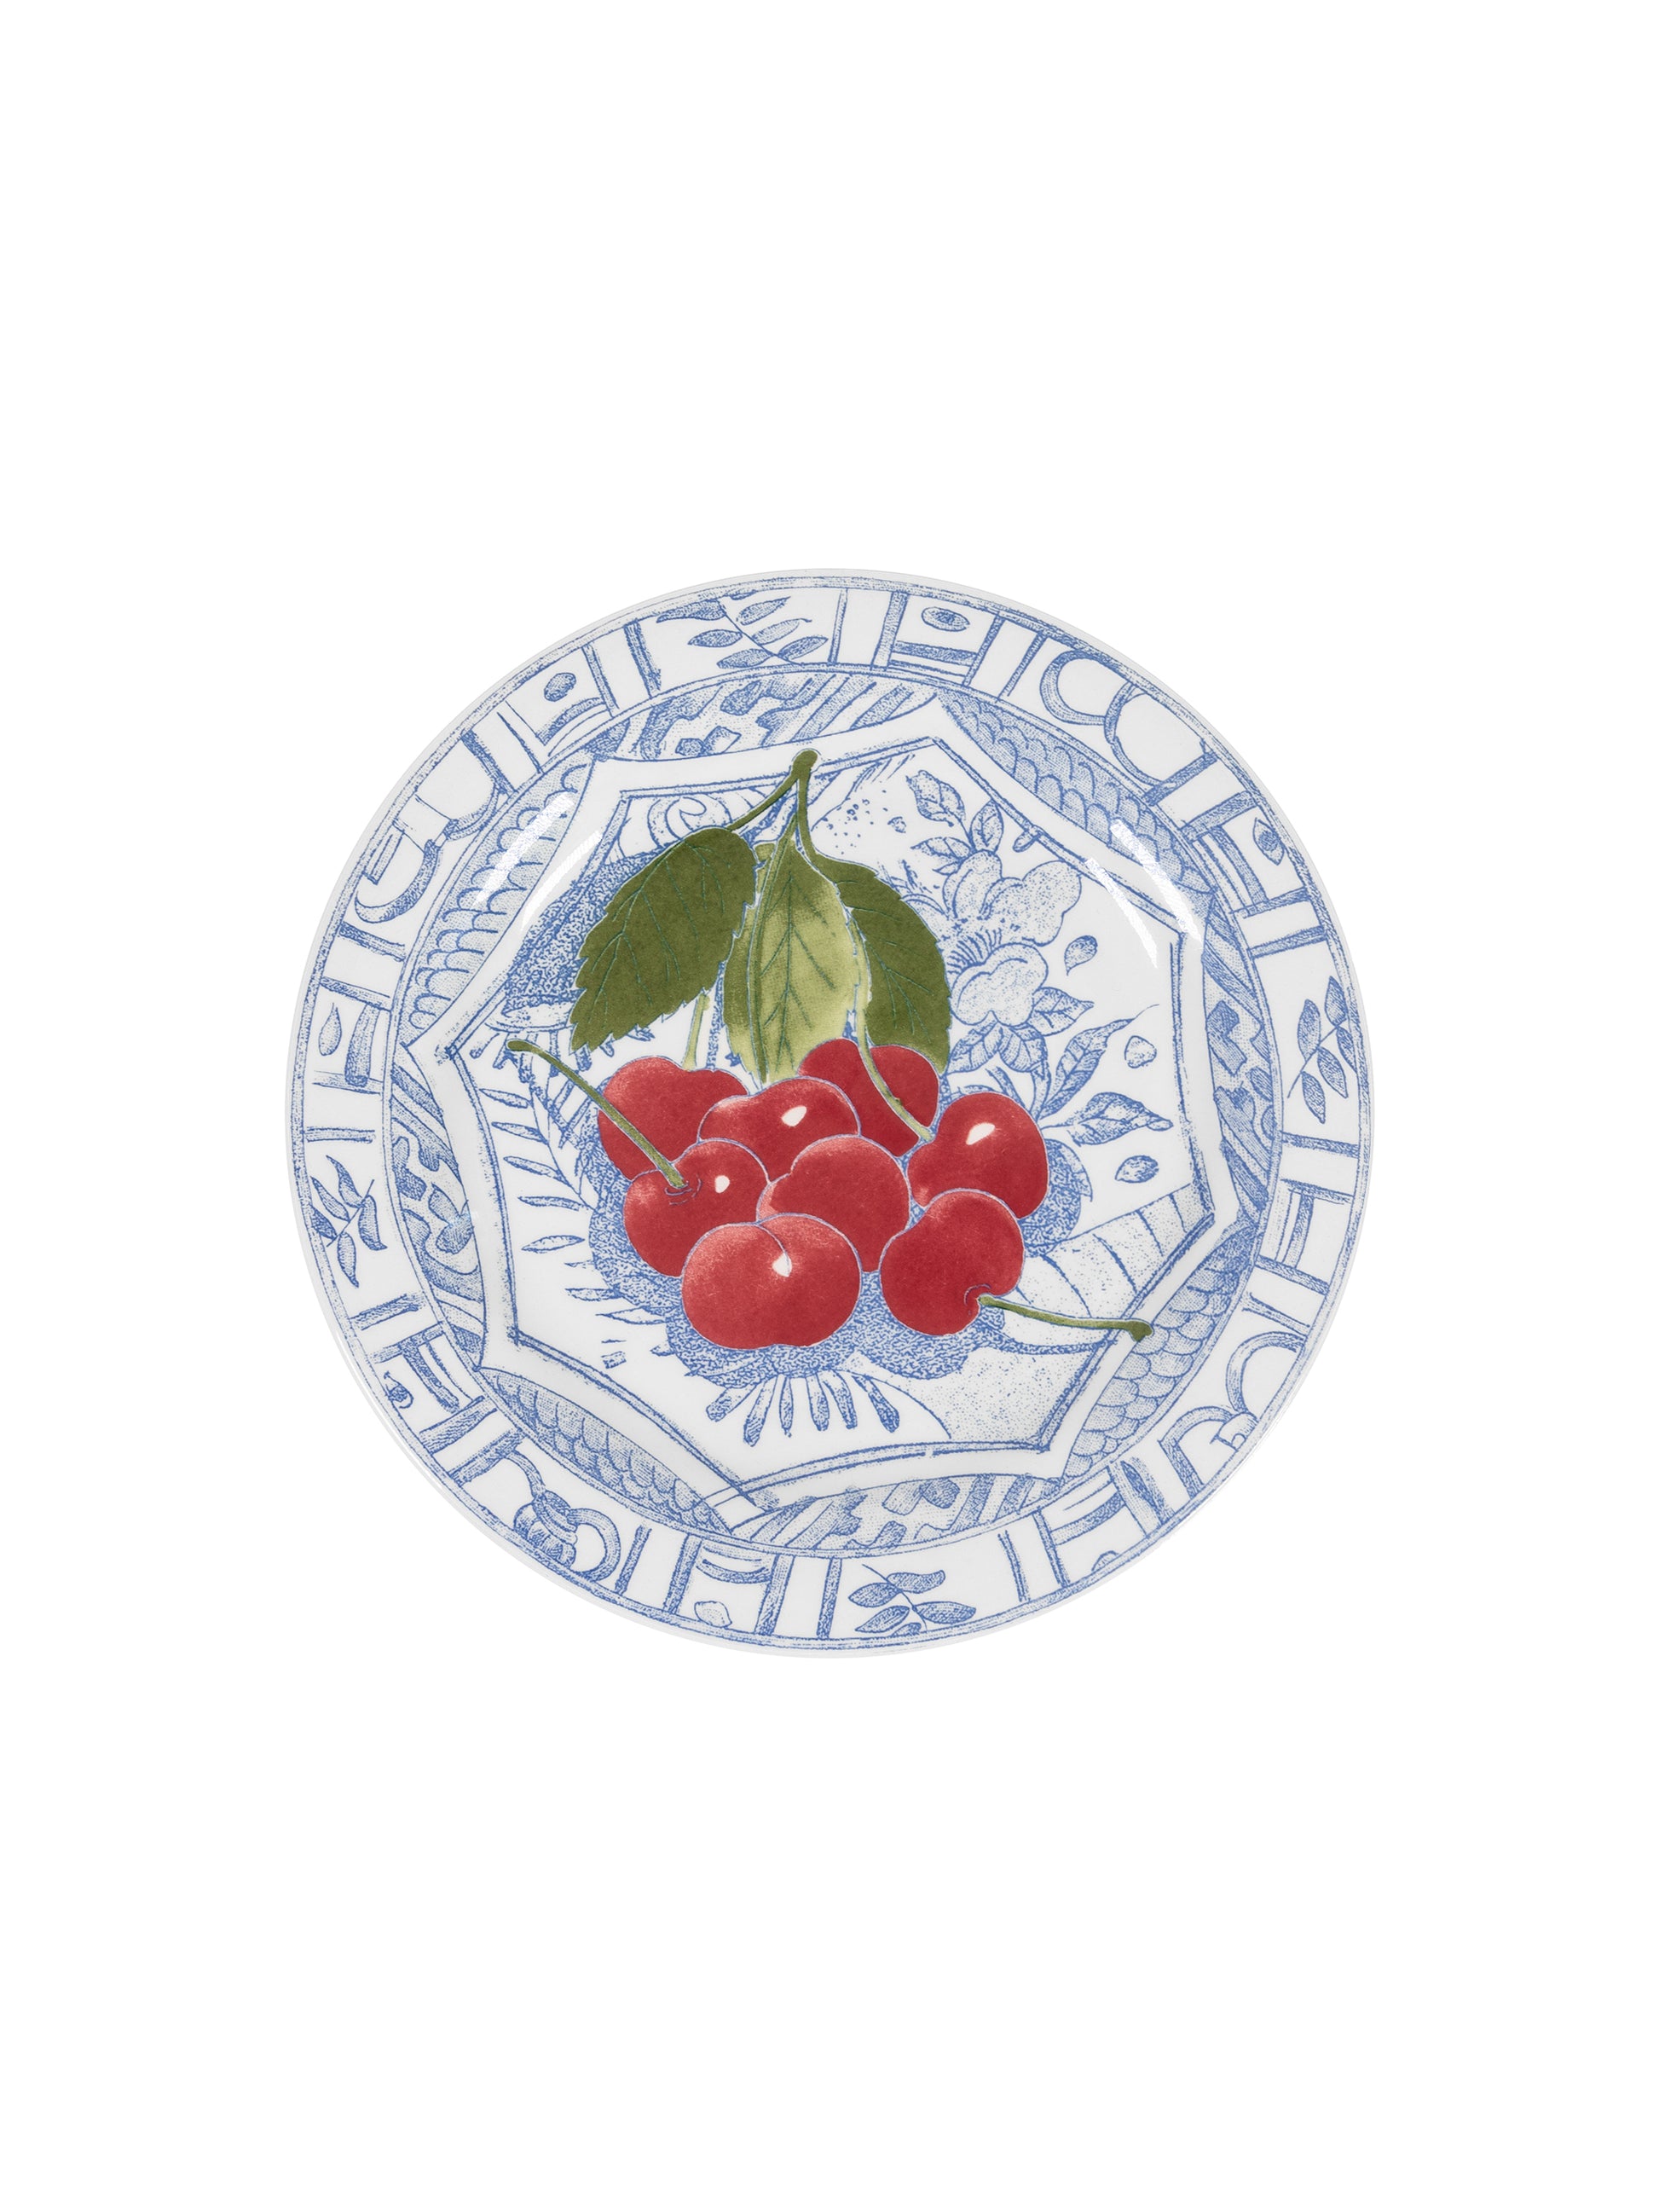 Gien Oiseau Bleu Fruits Canape Plate Cherries Weston Table